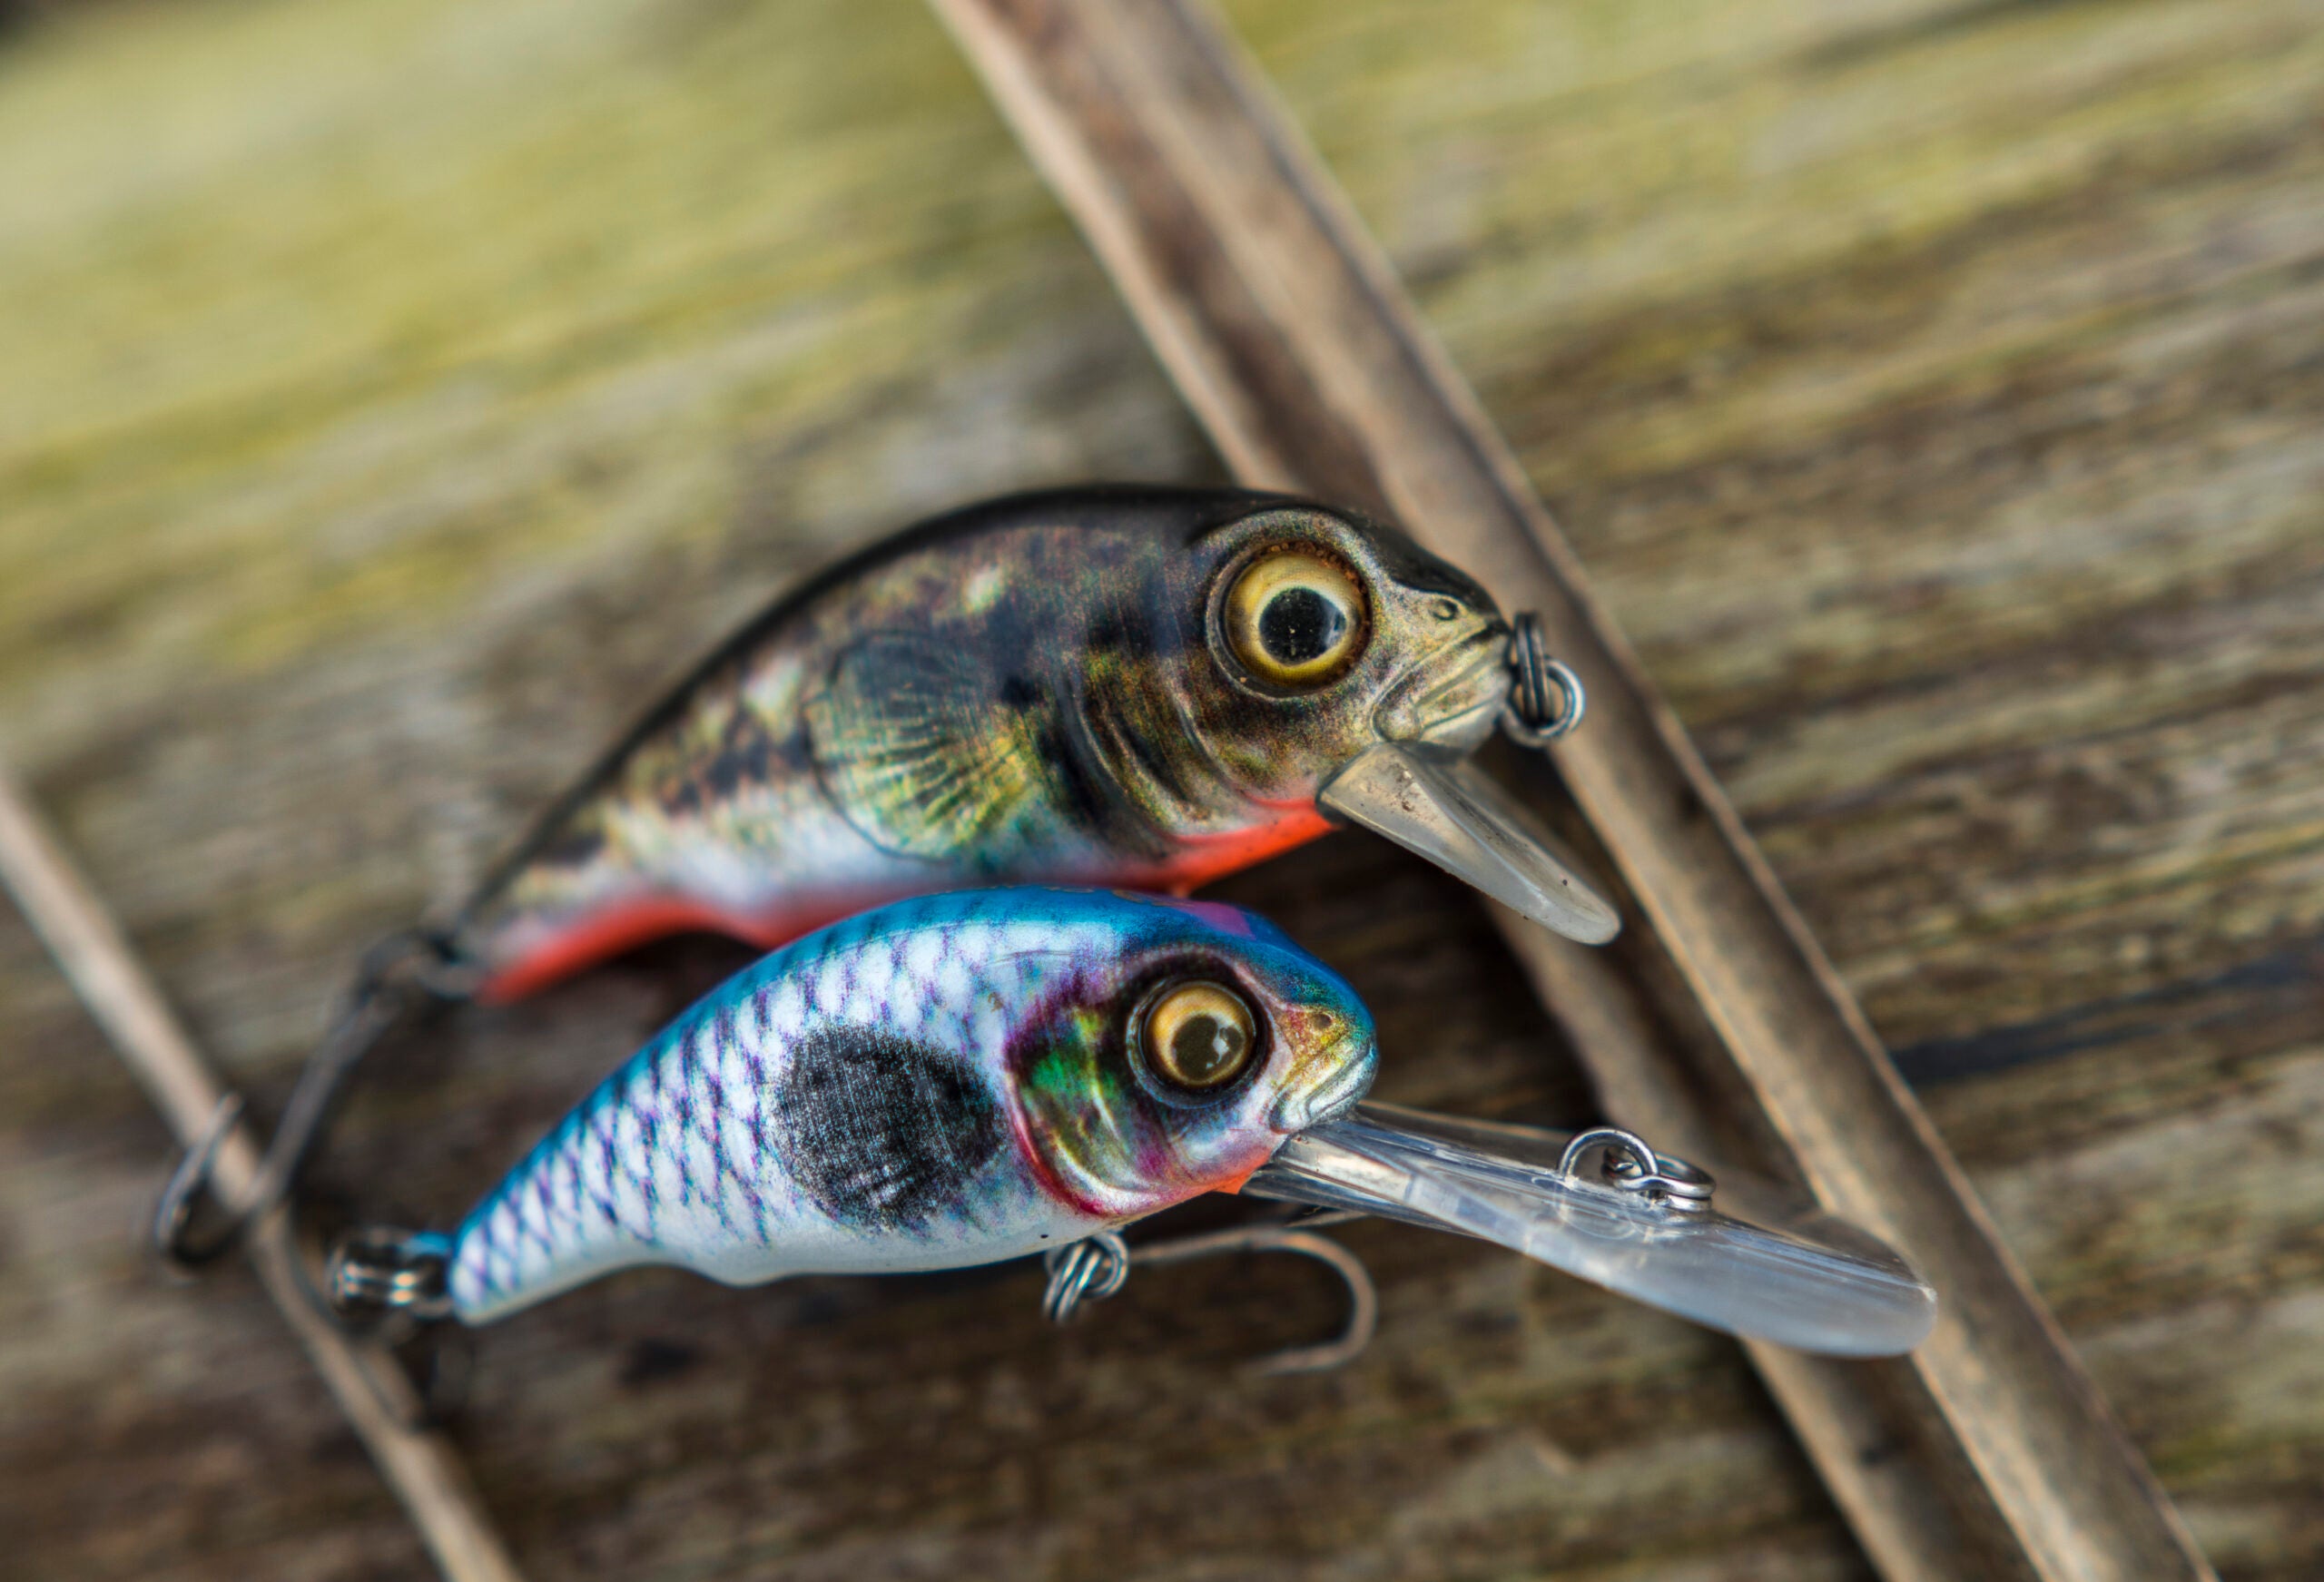 Vibration Pike Perch Fish Hooks Minnow Lures Trembling VIB Baits Winter  Fishing